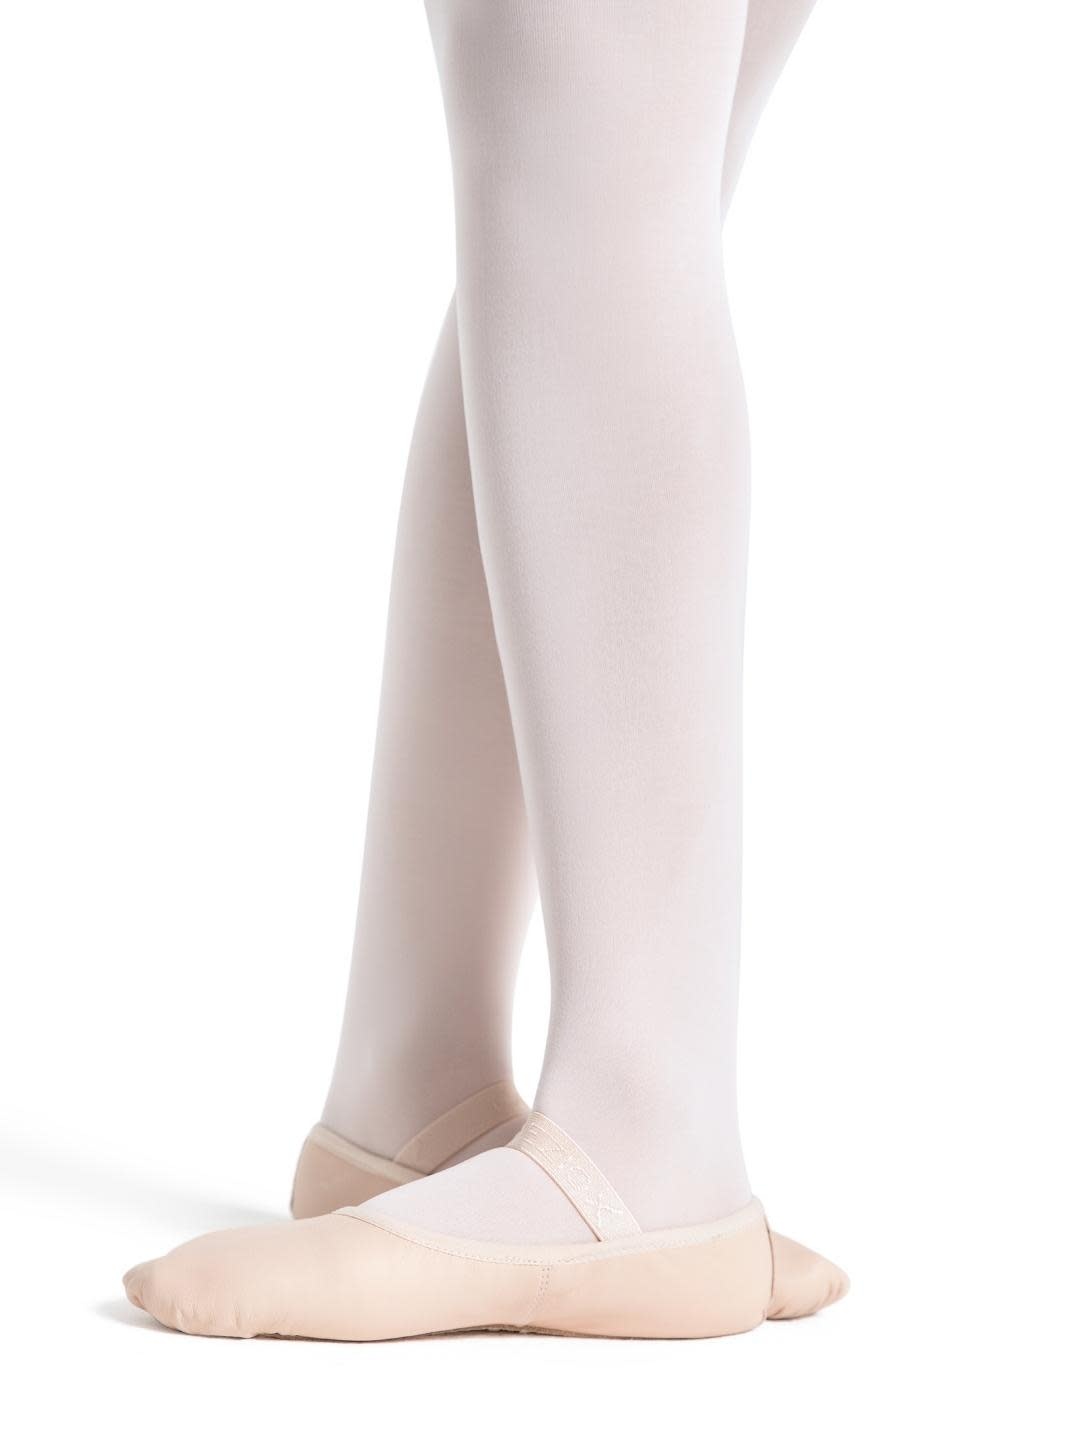 Stockings & Socks - Activewear,Ballet shoes,Lyrical Dance costumes